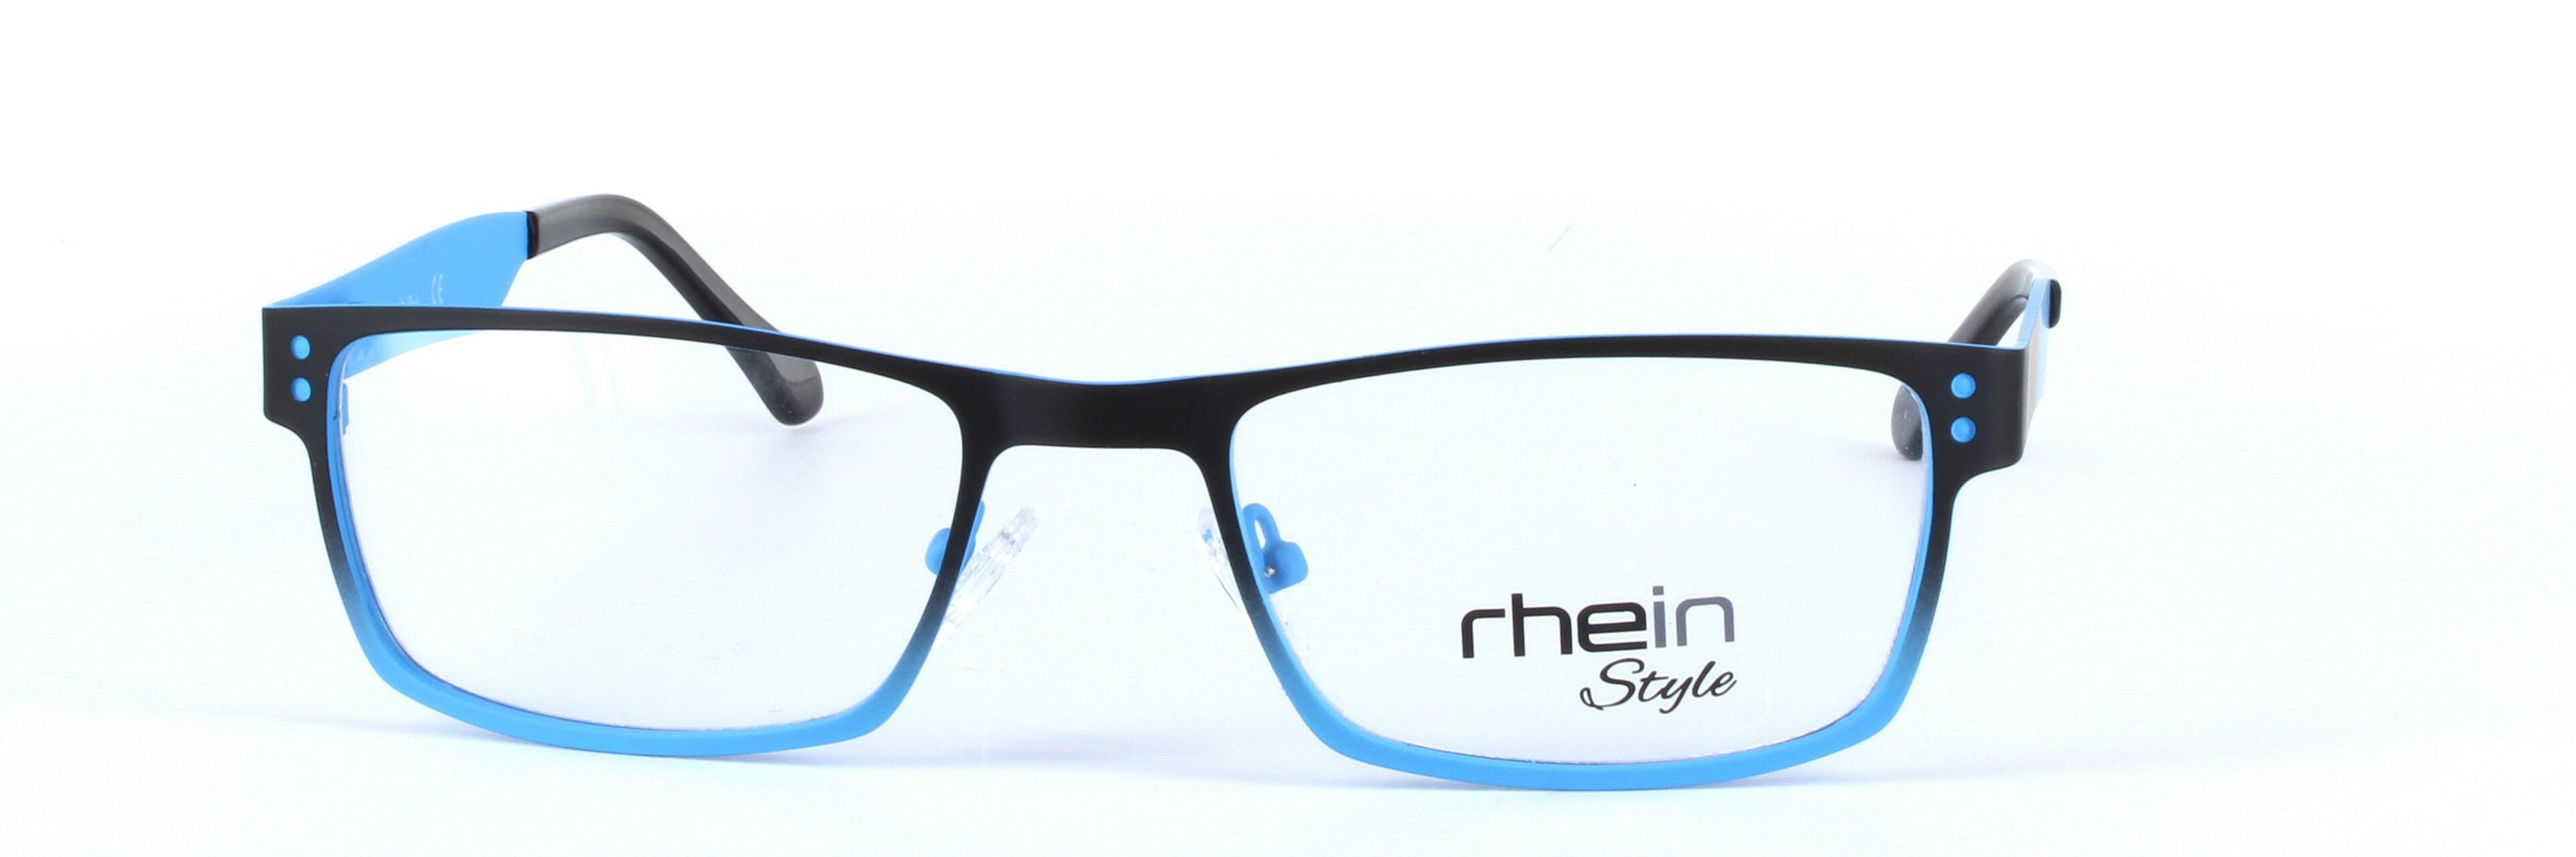 Ambleside Black and Blue Full Rim Rectangular Metal Glasses - Image View 5